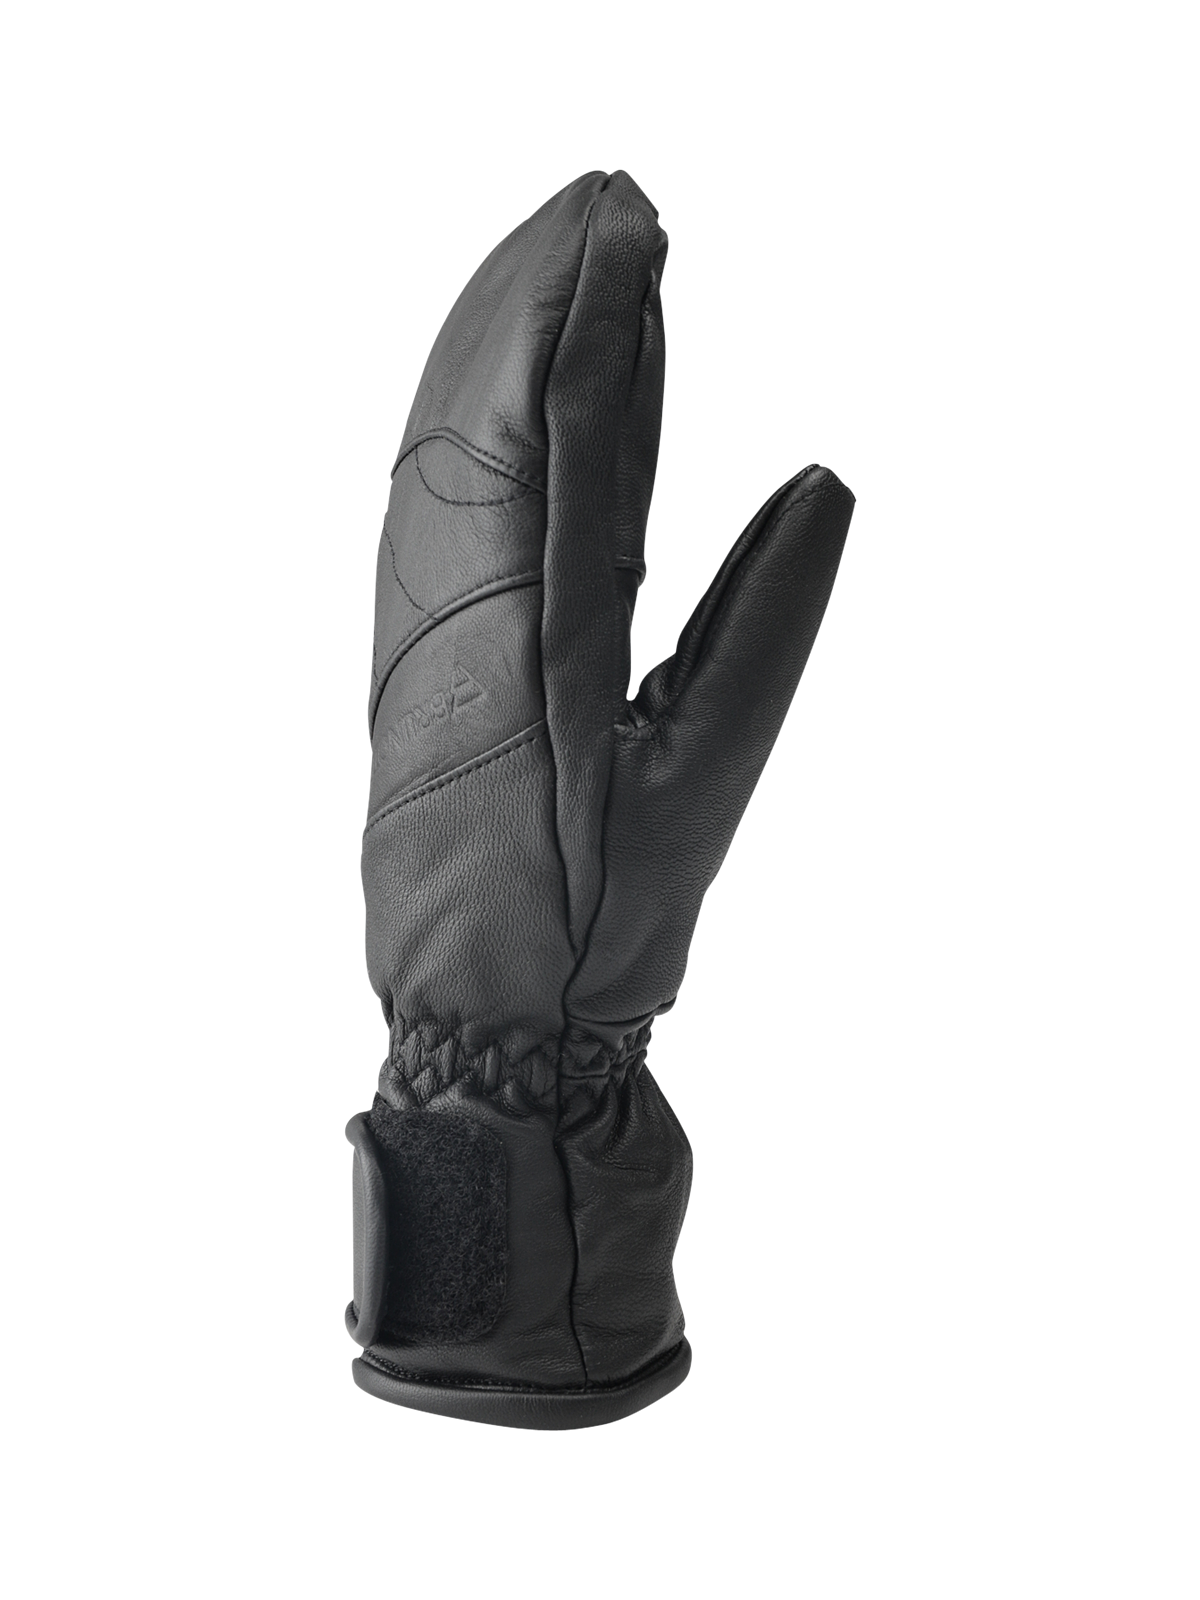 Kitio Gloves | Black